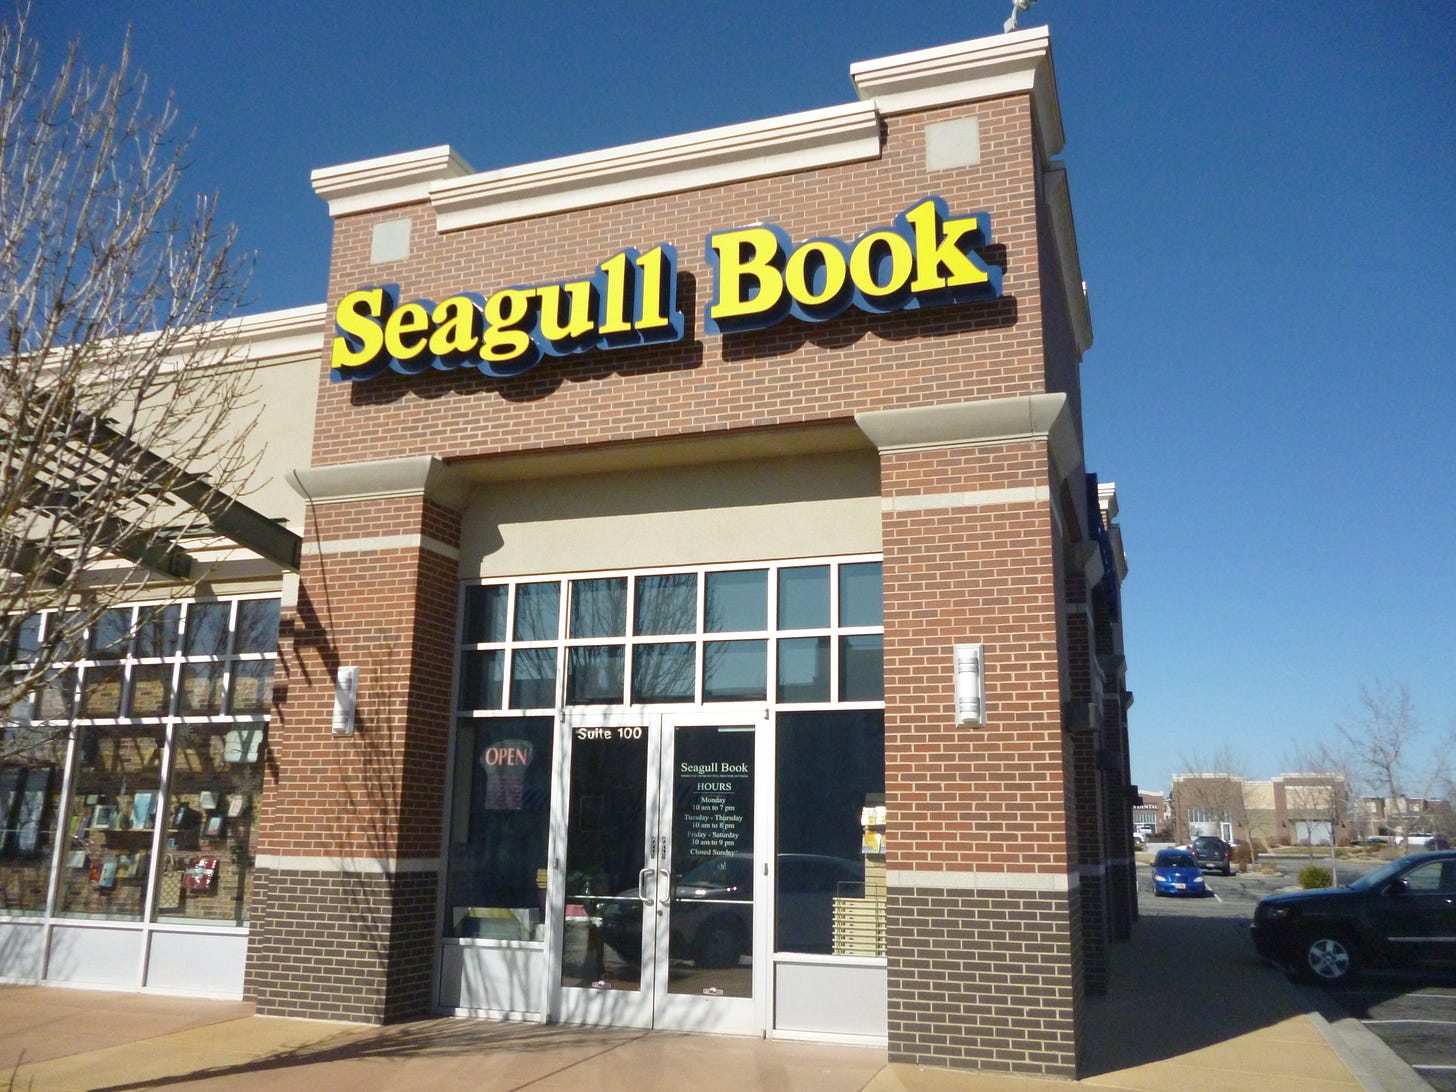 Seagull Book - Daybreak, Utah - www.daybreak.com